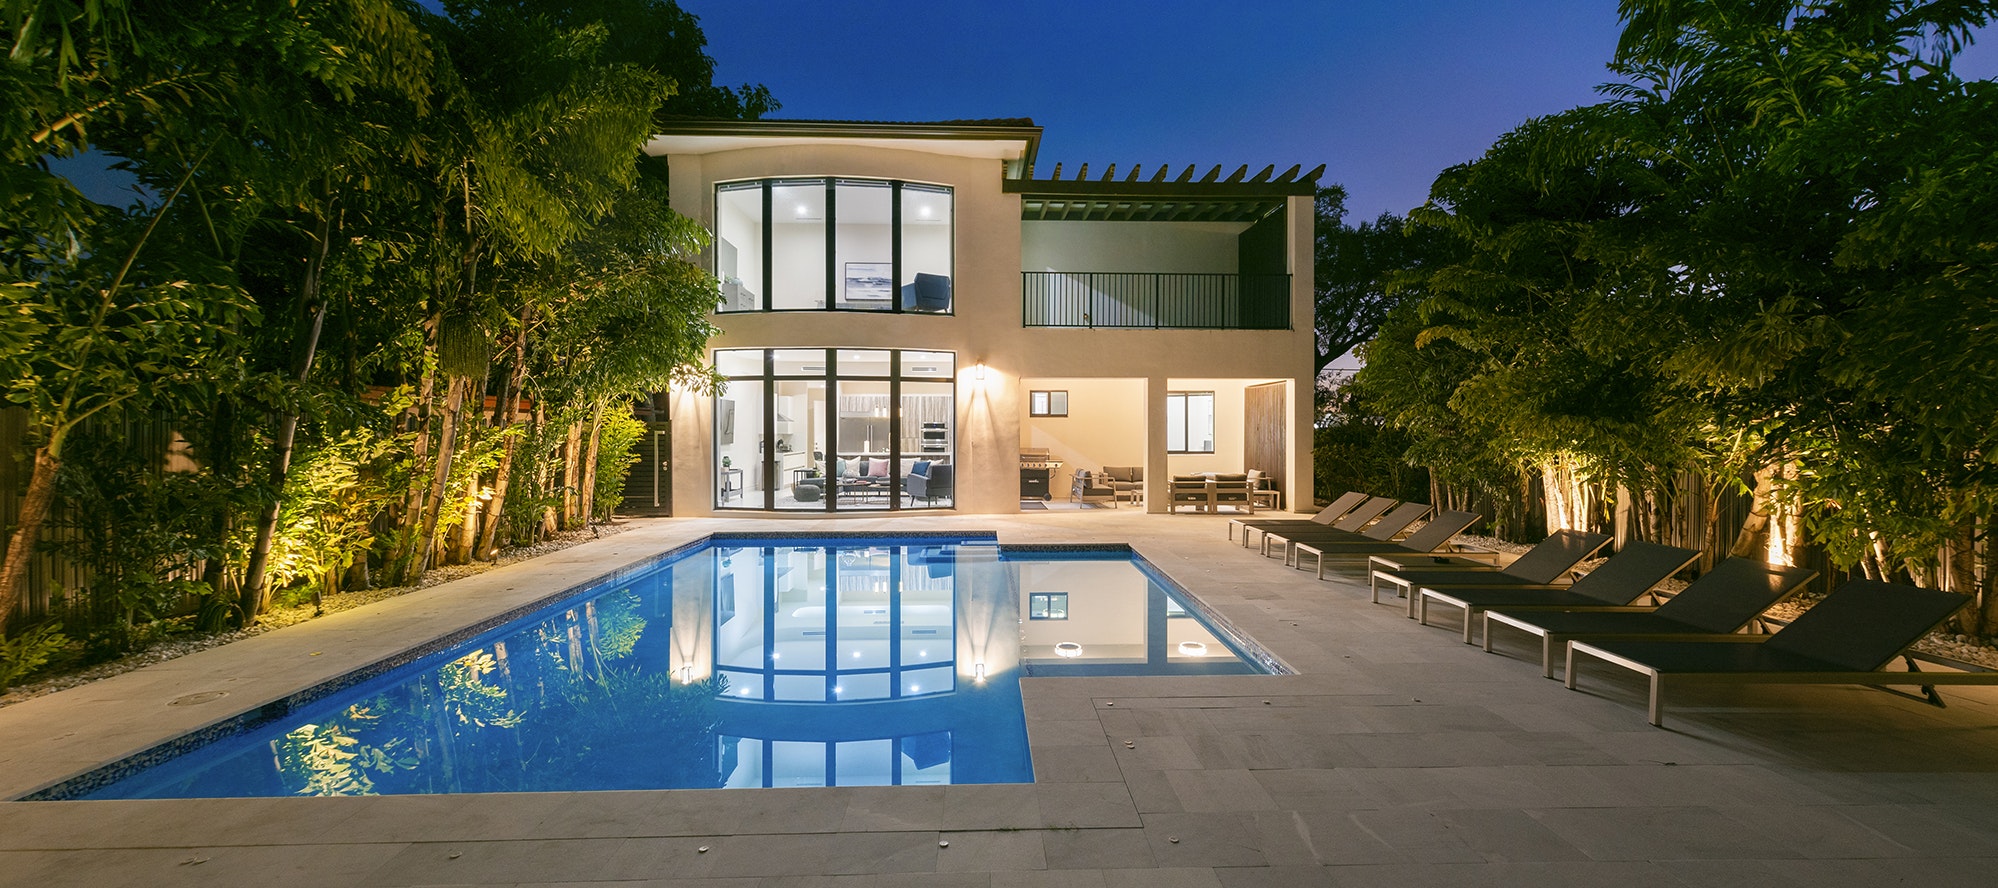 Villa Coral luxury rental in Coral Gables